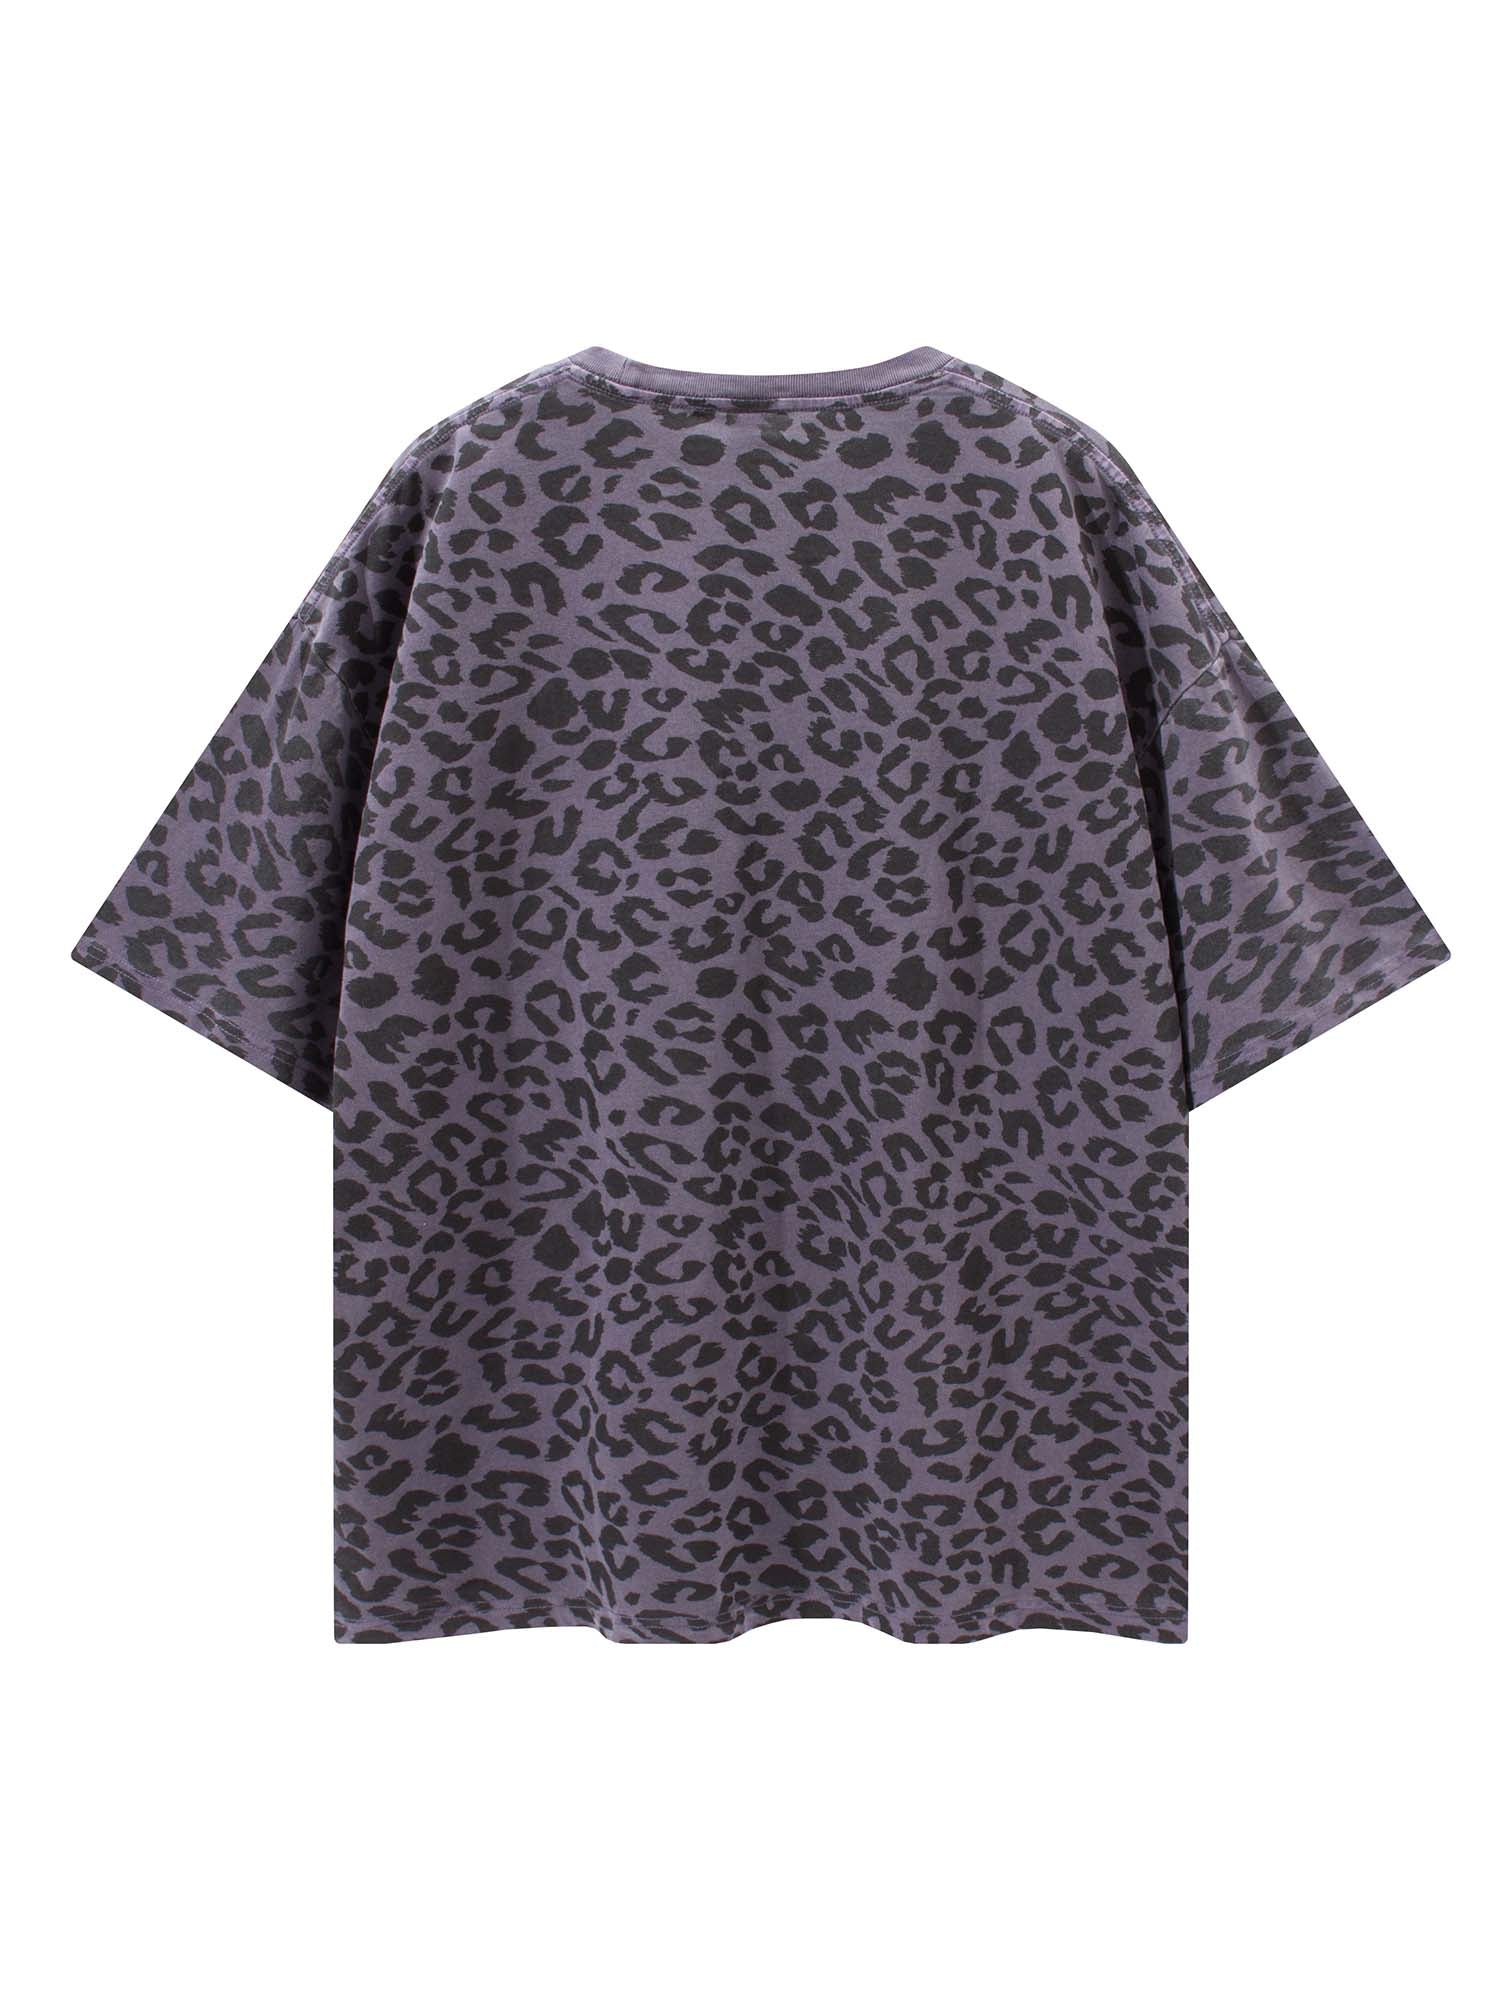 JUSTNOTAG Purple leopard Print 100% Cotton Short Sleeve Tee